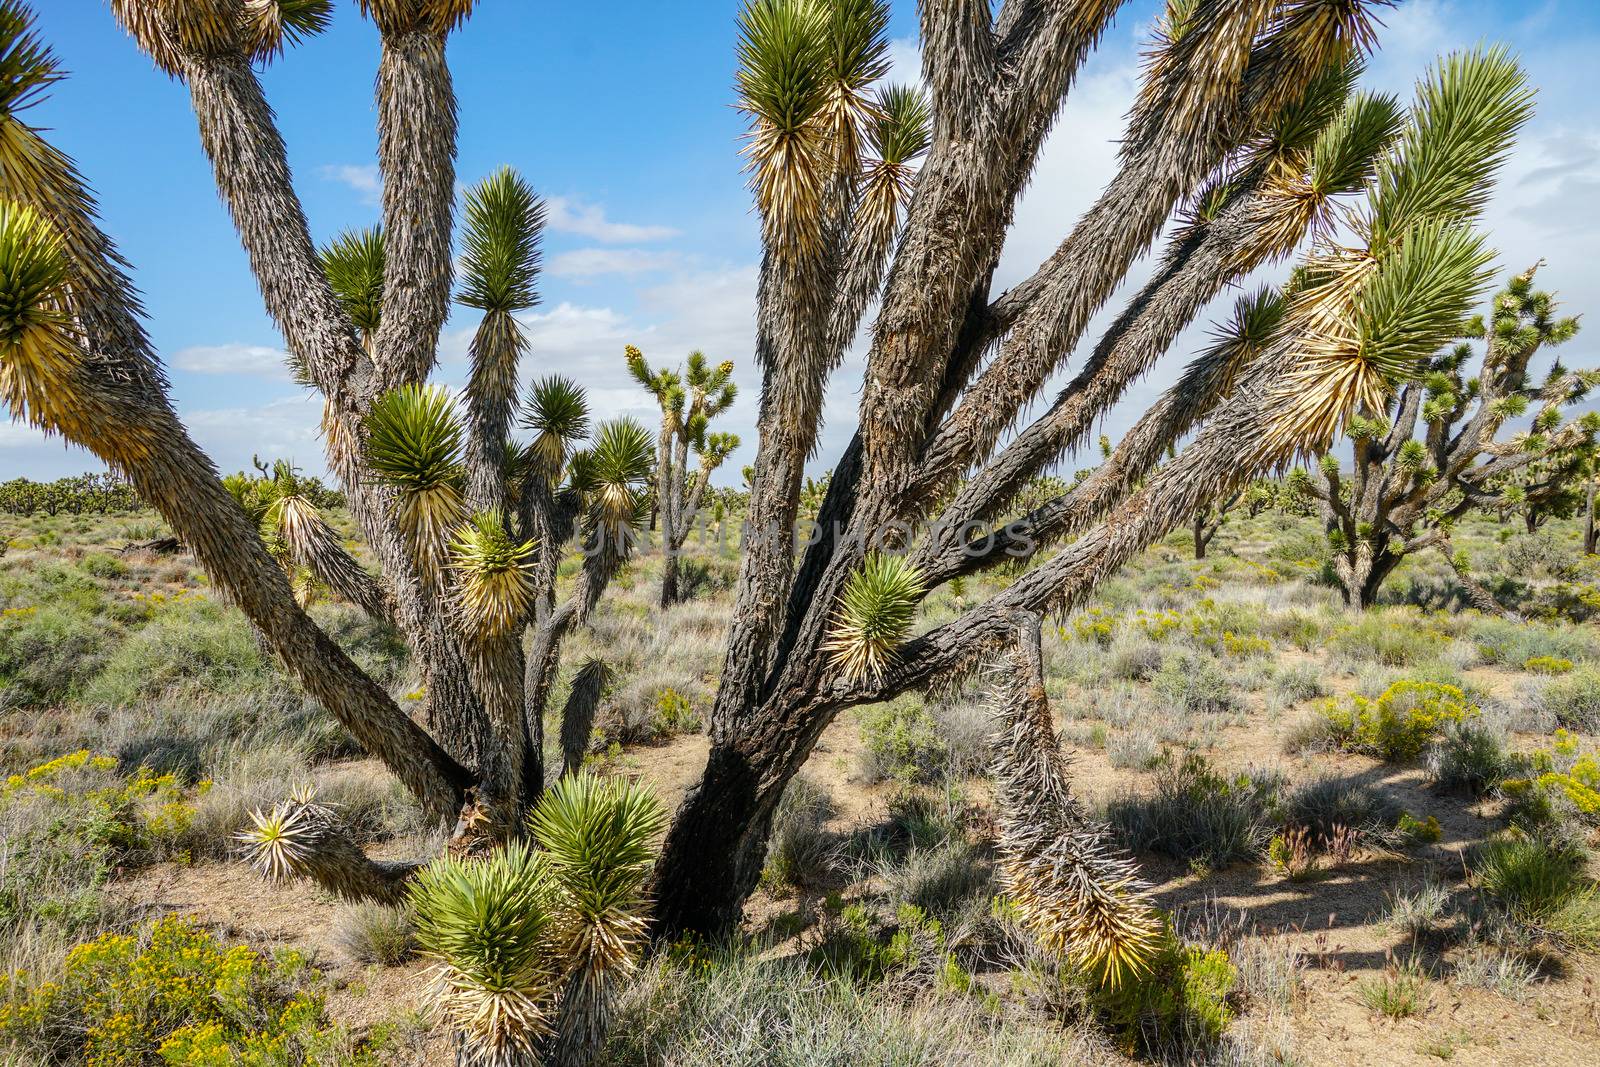  Yucca brevifolia, Joshua Tree is a plant species belonging to the genus Yucca. Joshua Tree National Park